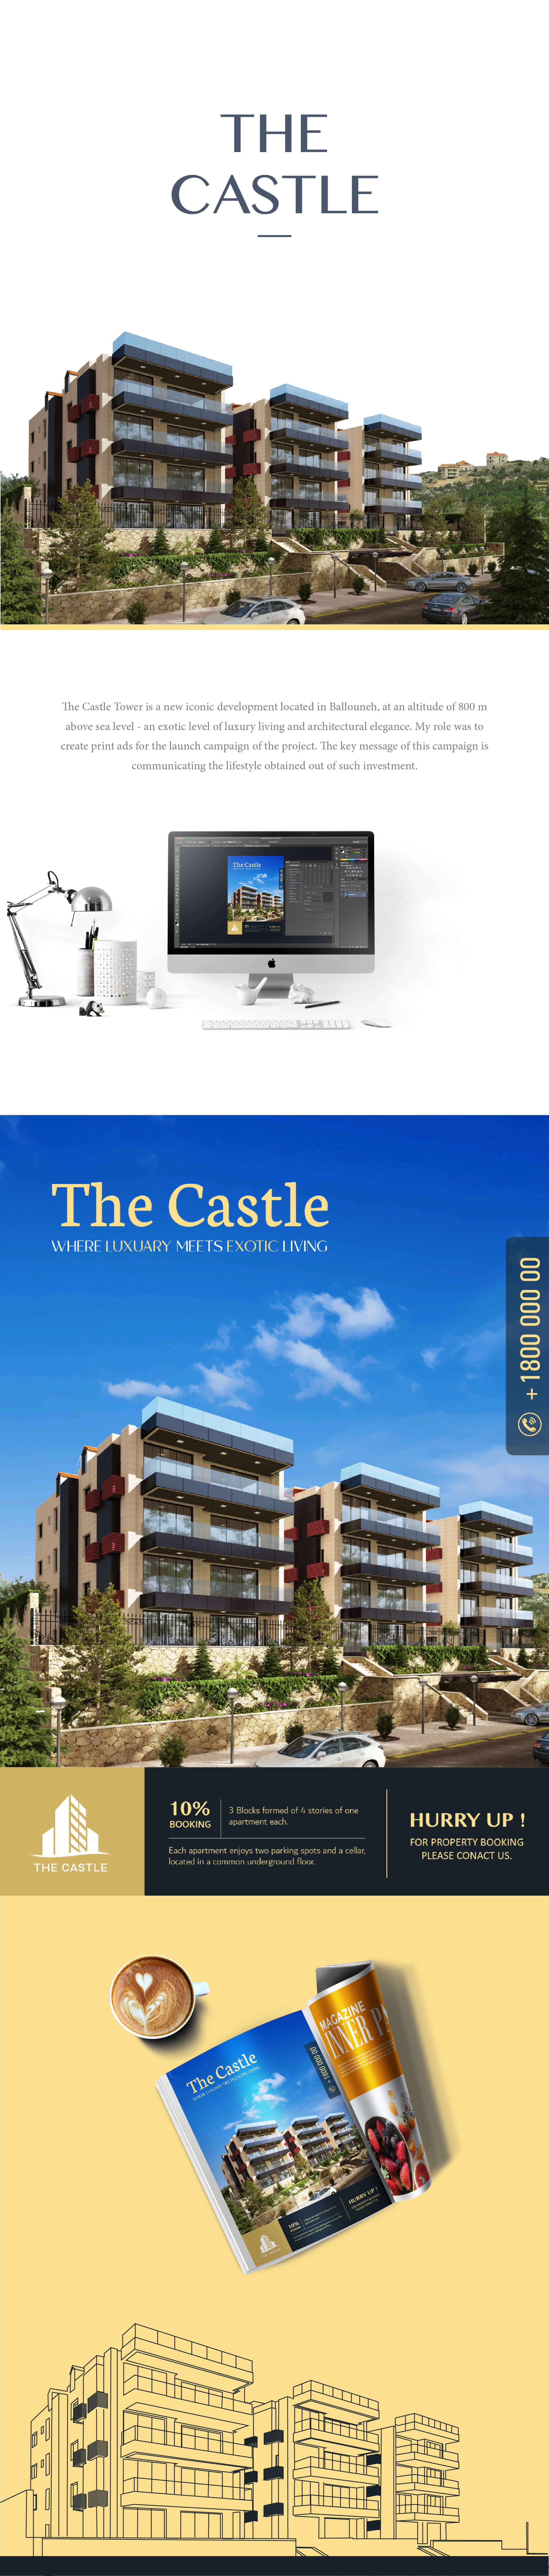 The Castle Brochure